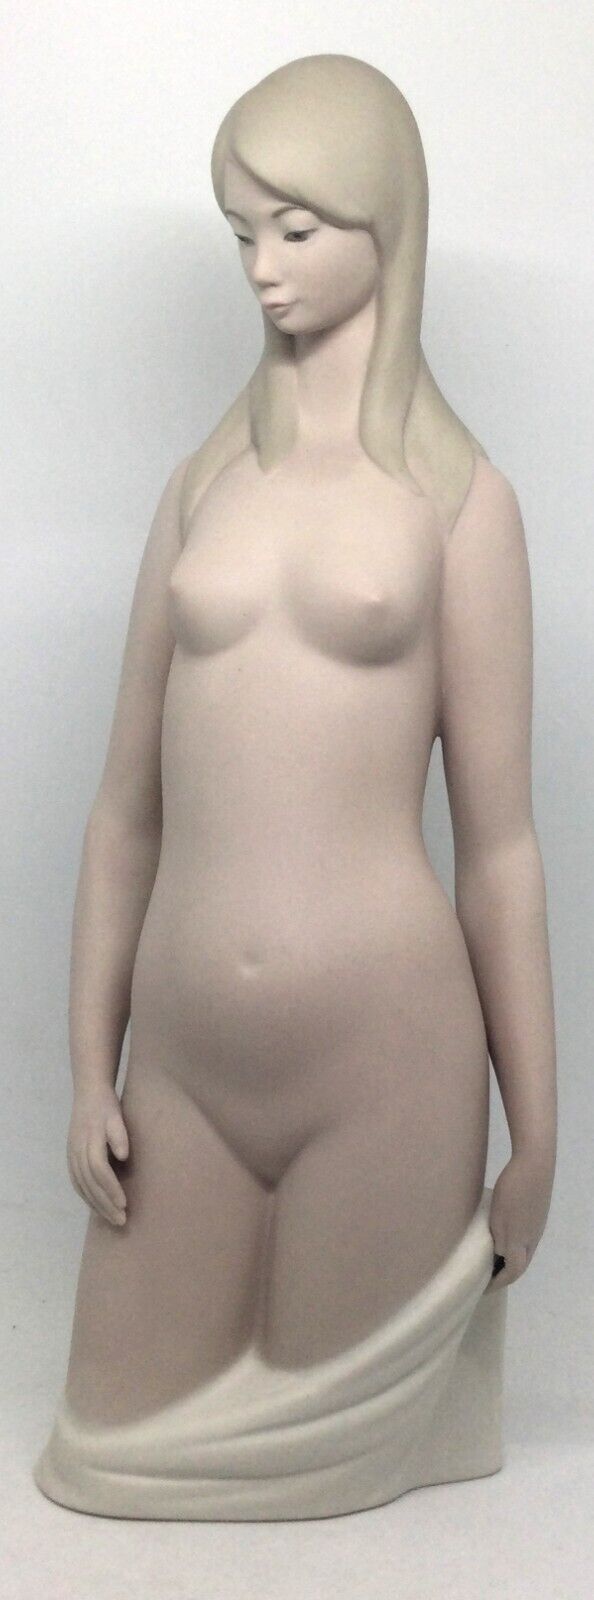 Lladro Nude woman torso Porcelain figurine Model # 4512 12.75” tall [AH1198]